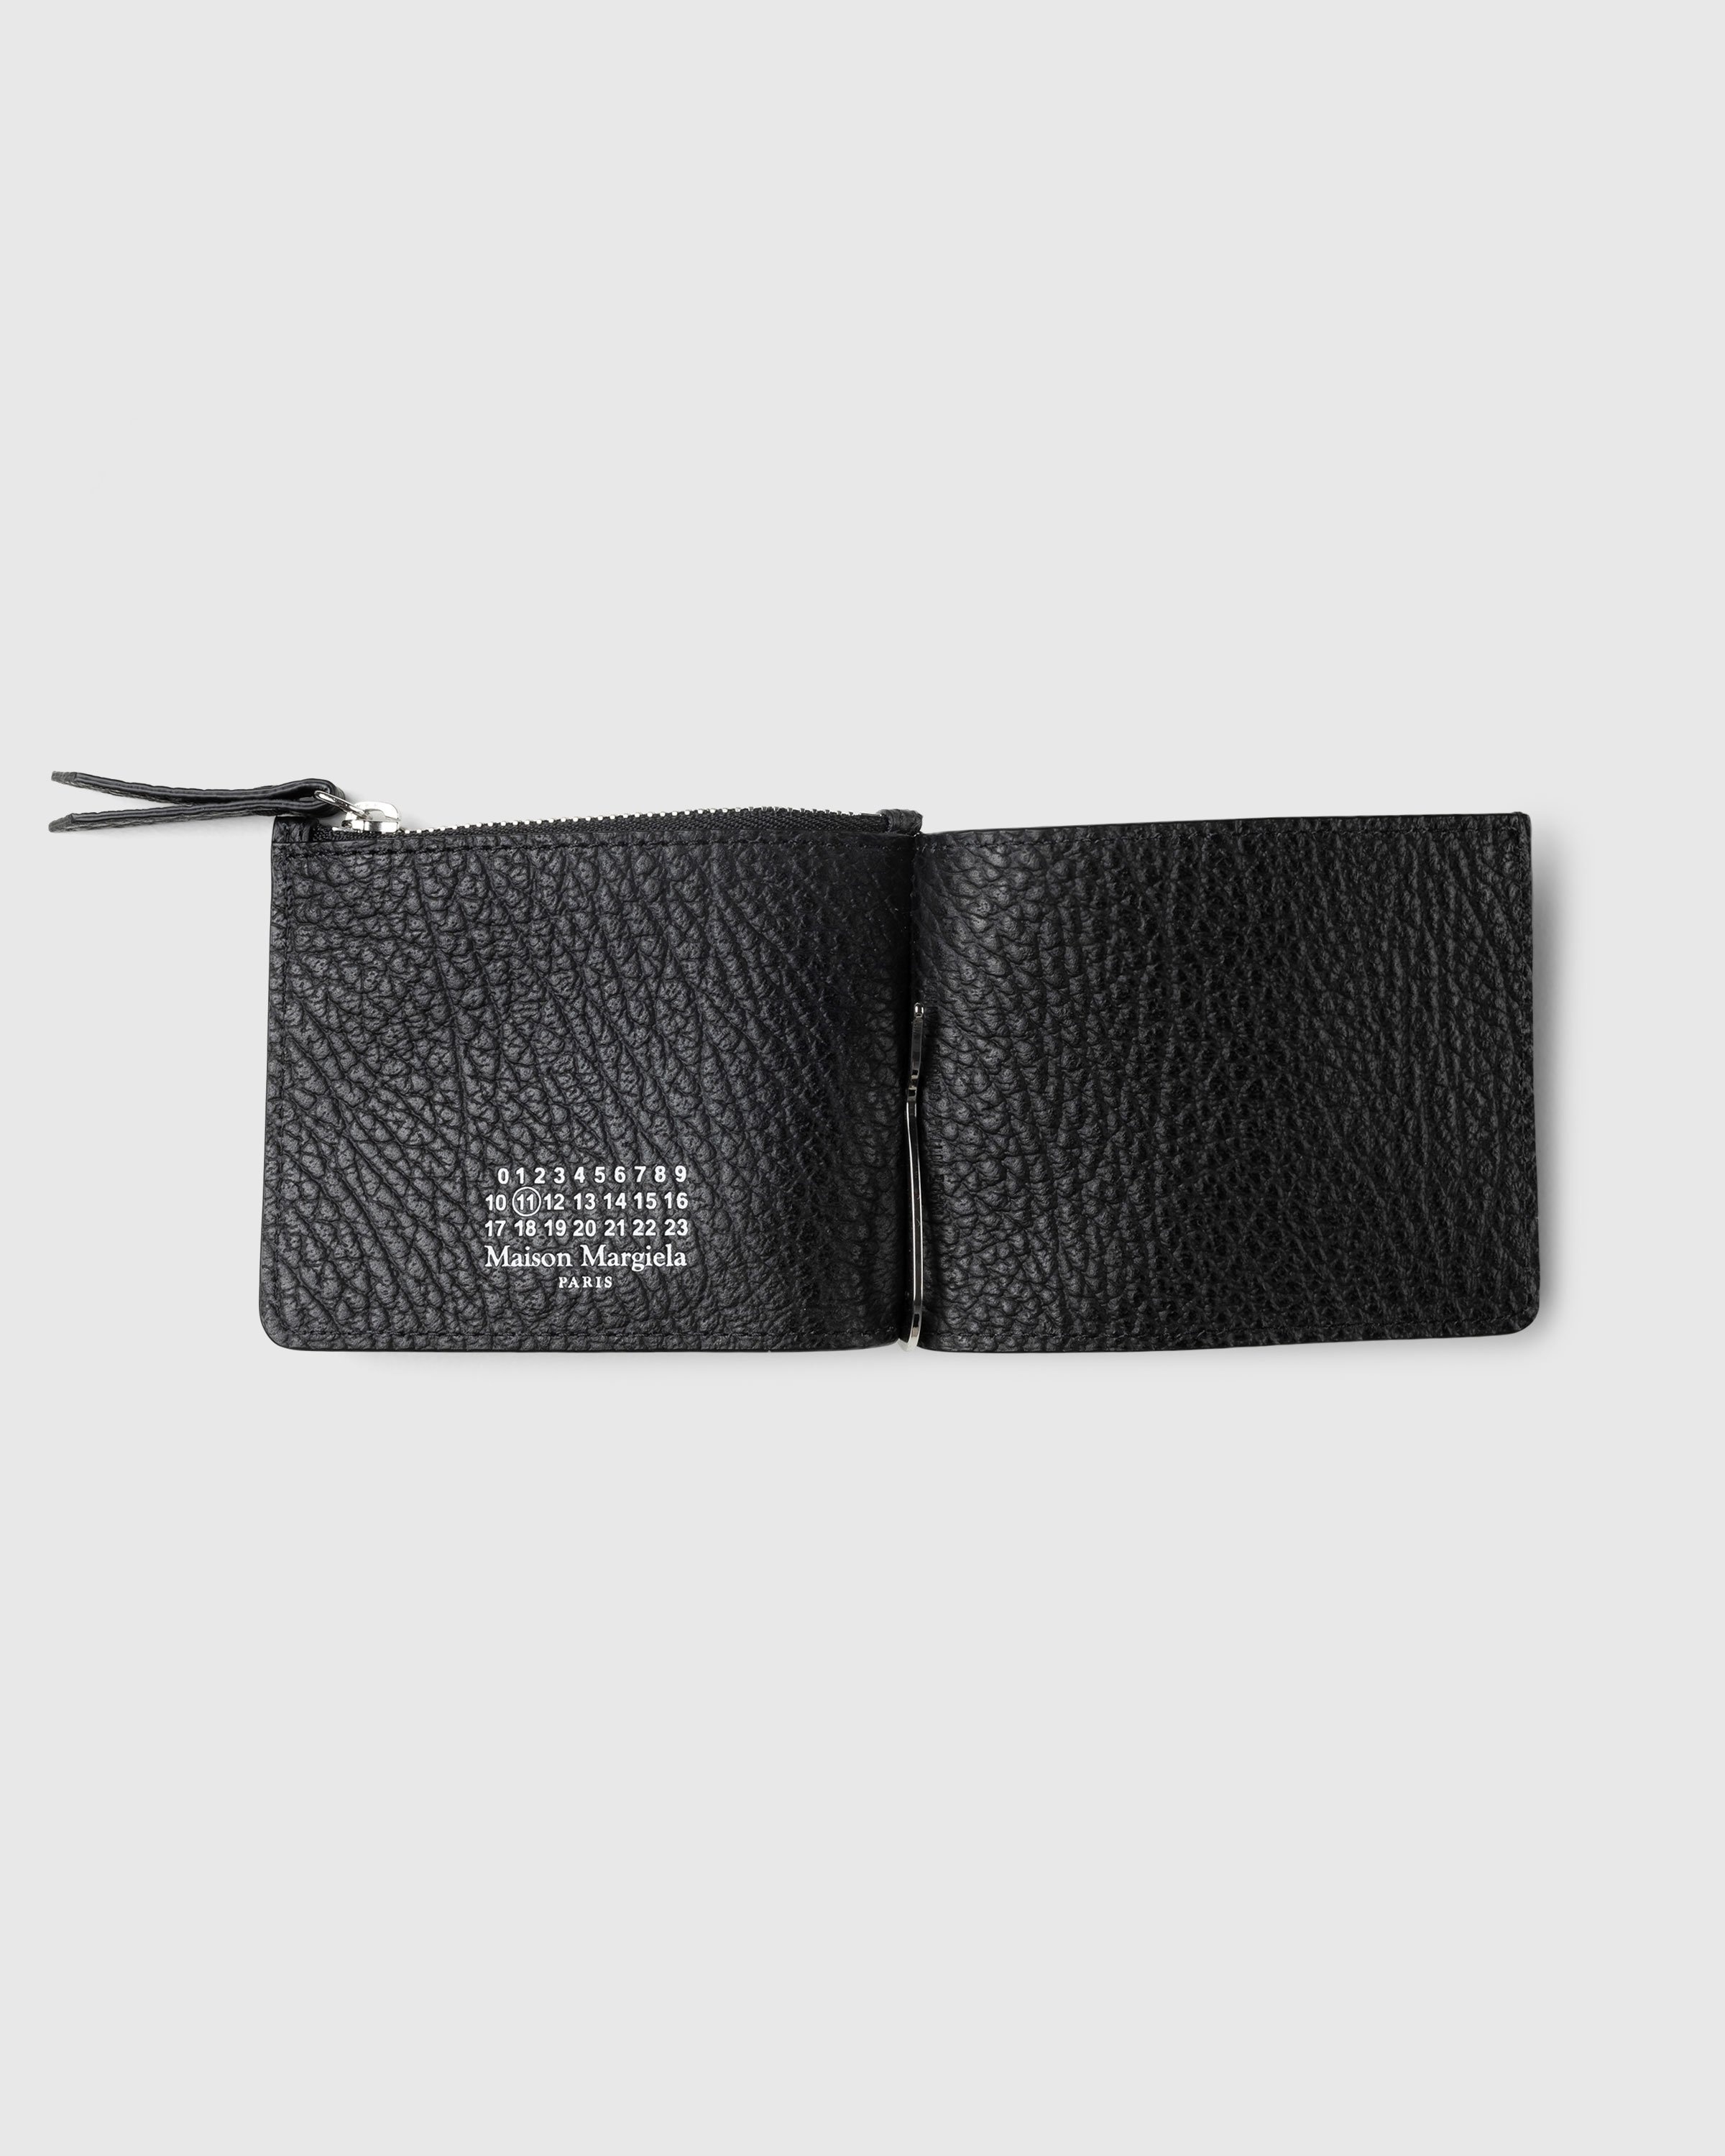 Maison Margiela – Leather Card Holder With Money Clip Black 